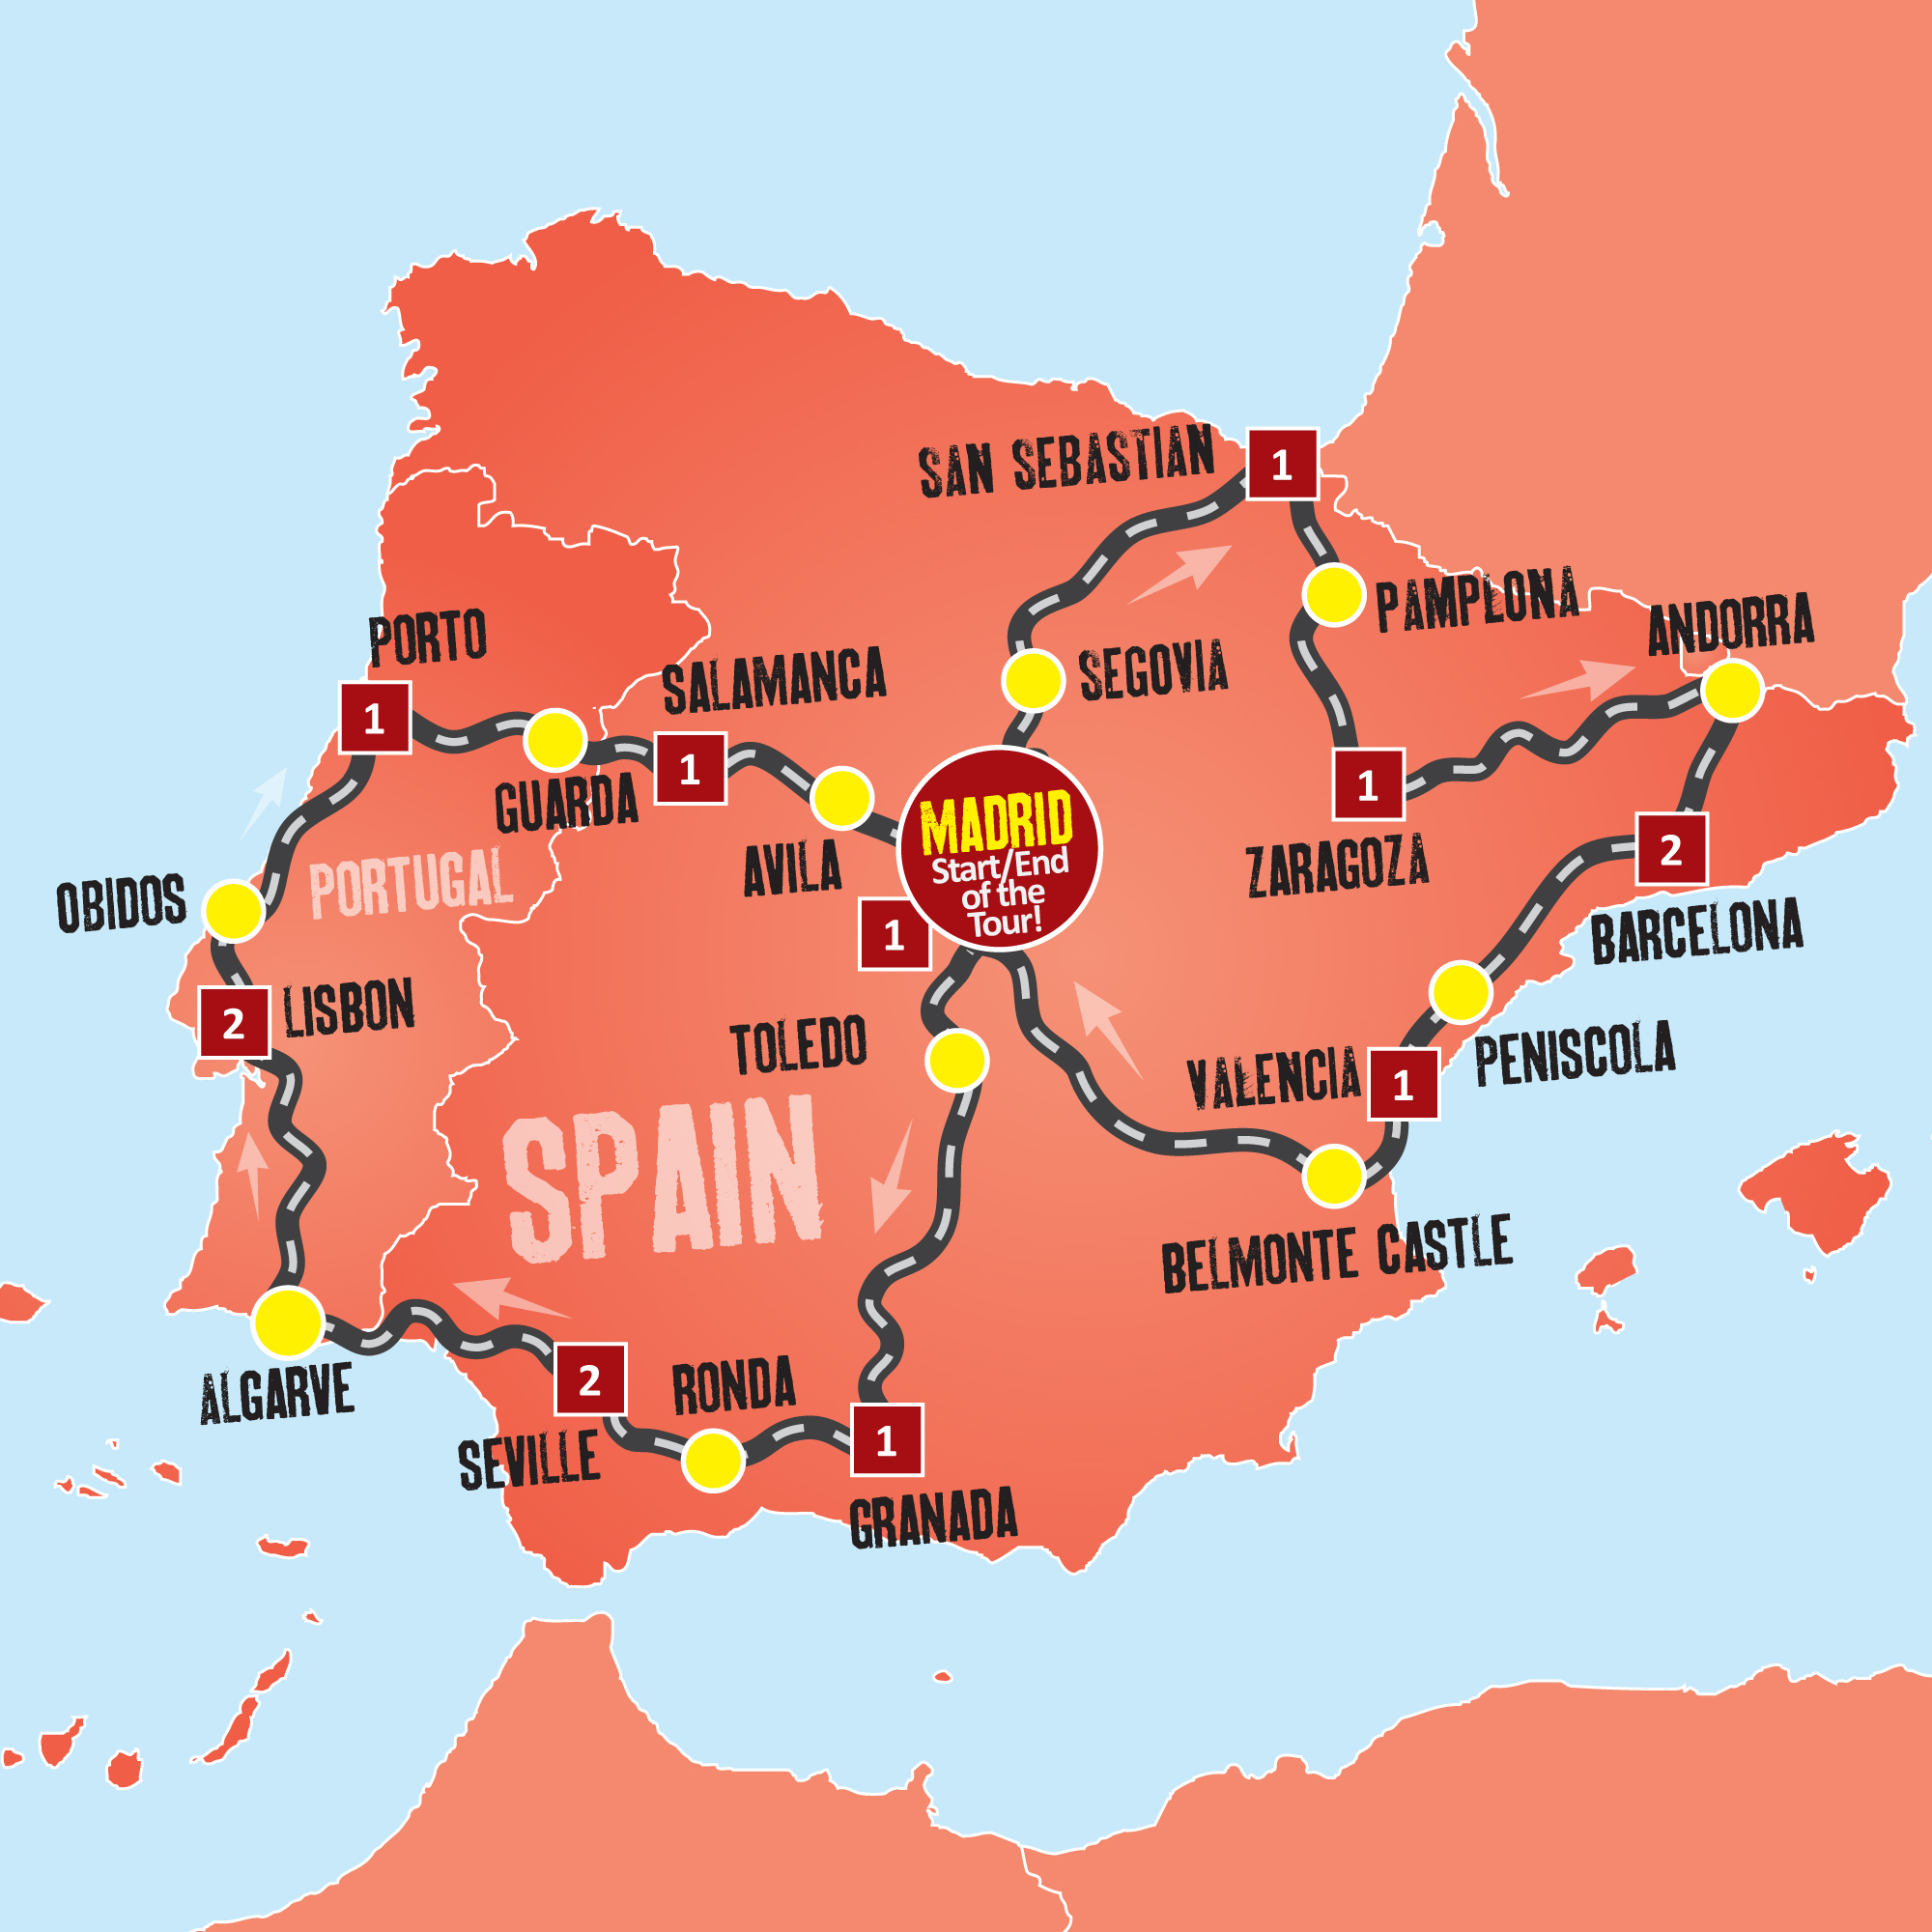 tourhub | Expat Explore Travel | Spain And Portugal Explorer | Tour Map